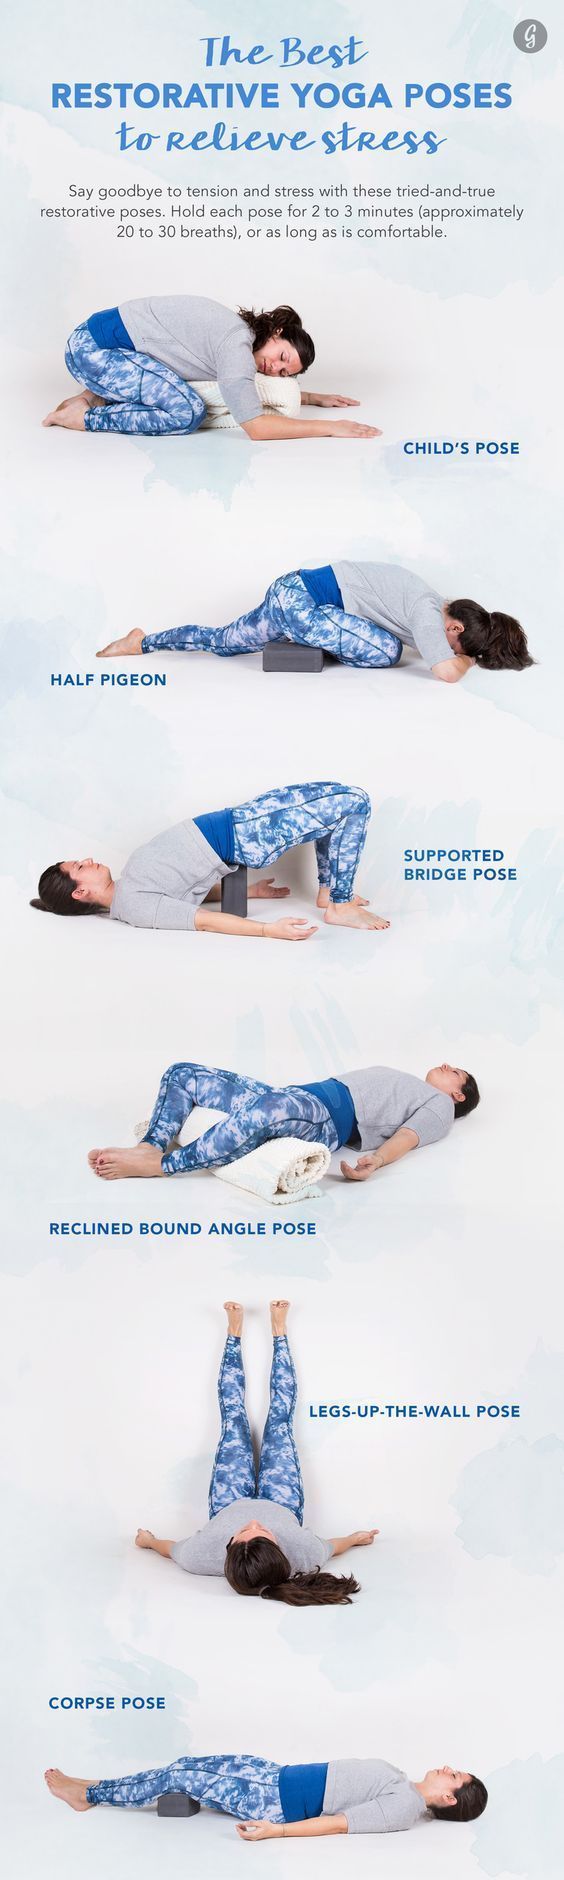 restorative yoga for migraines